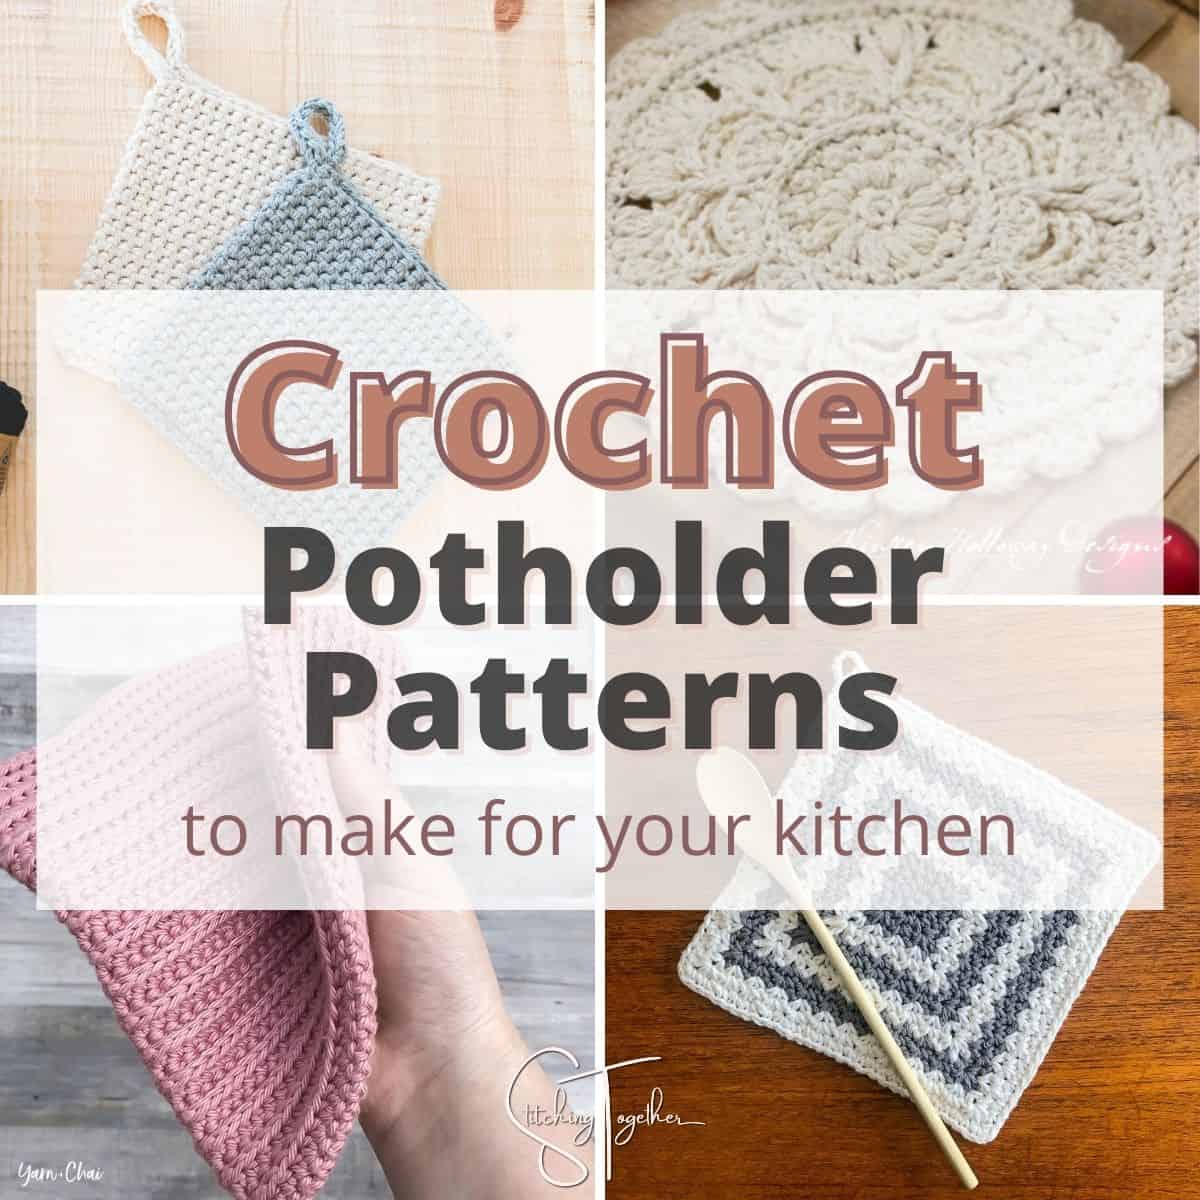 Crochet Instant Pot Cover Pattern